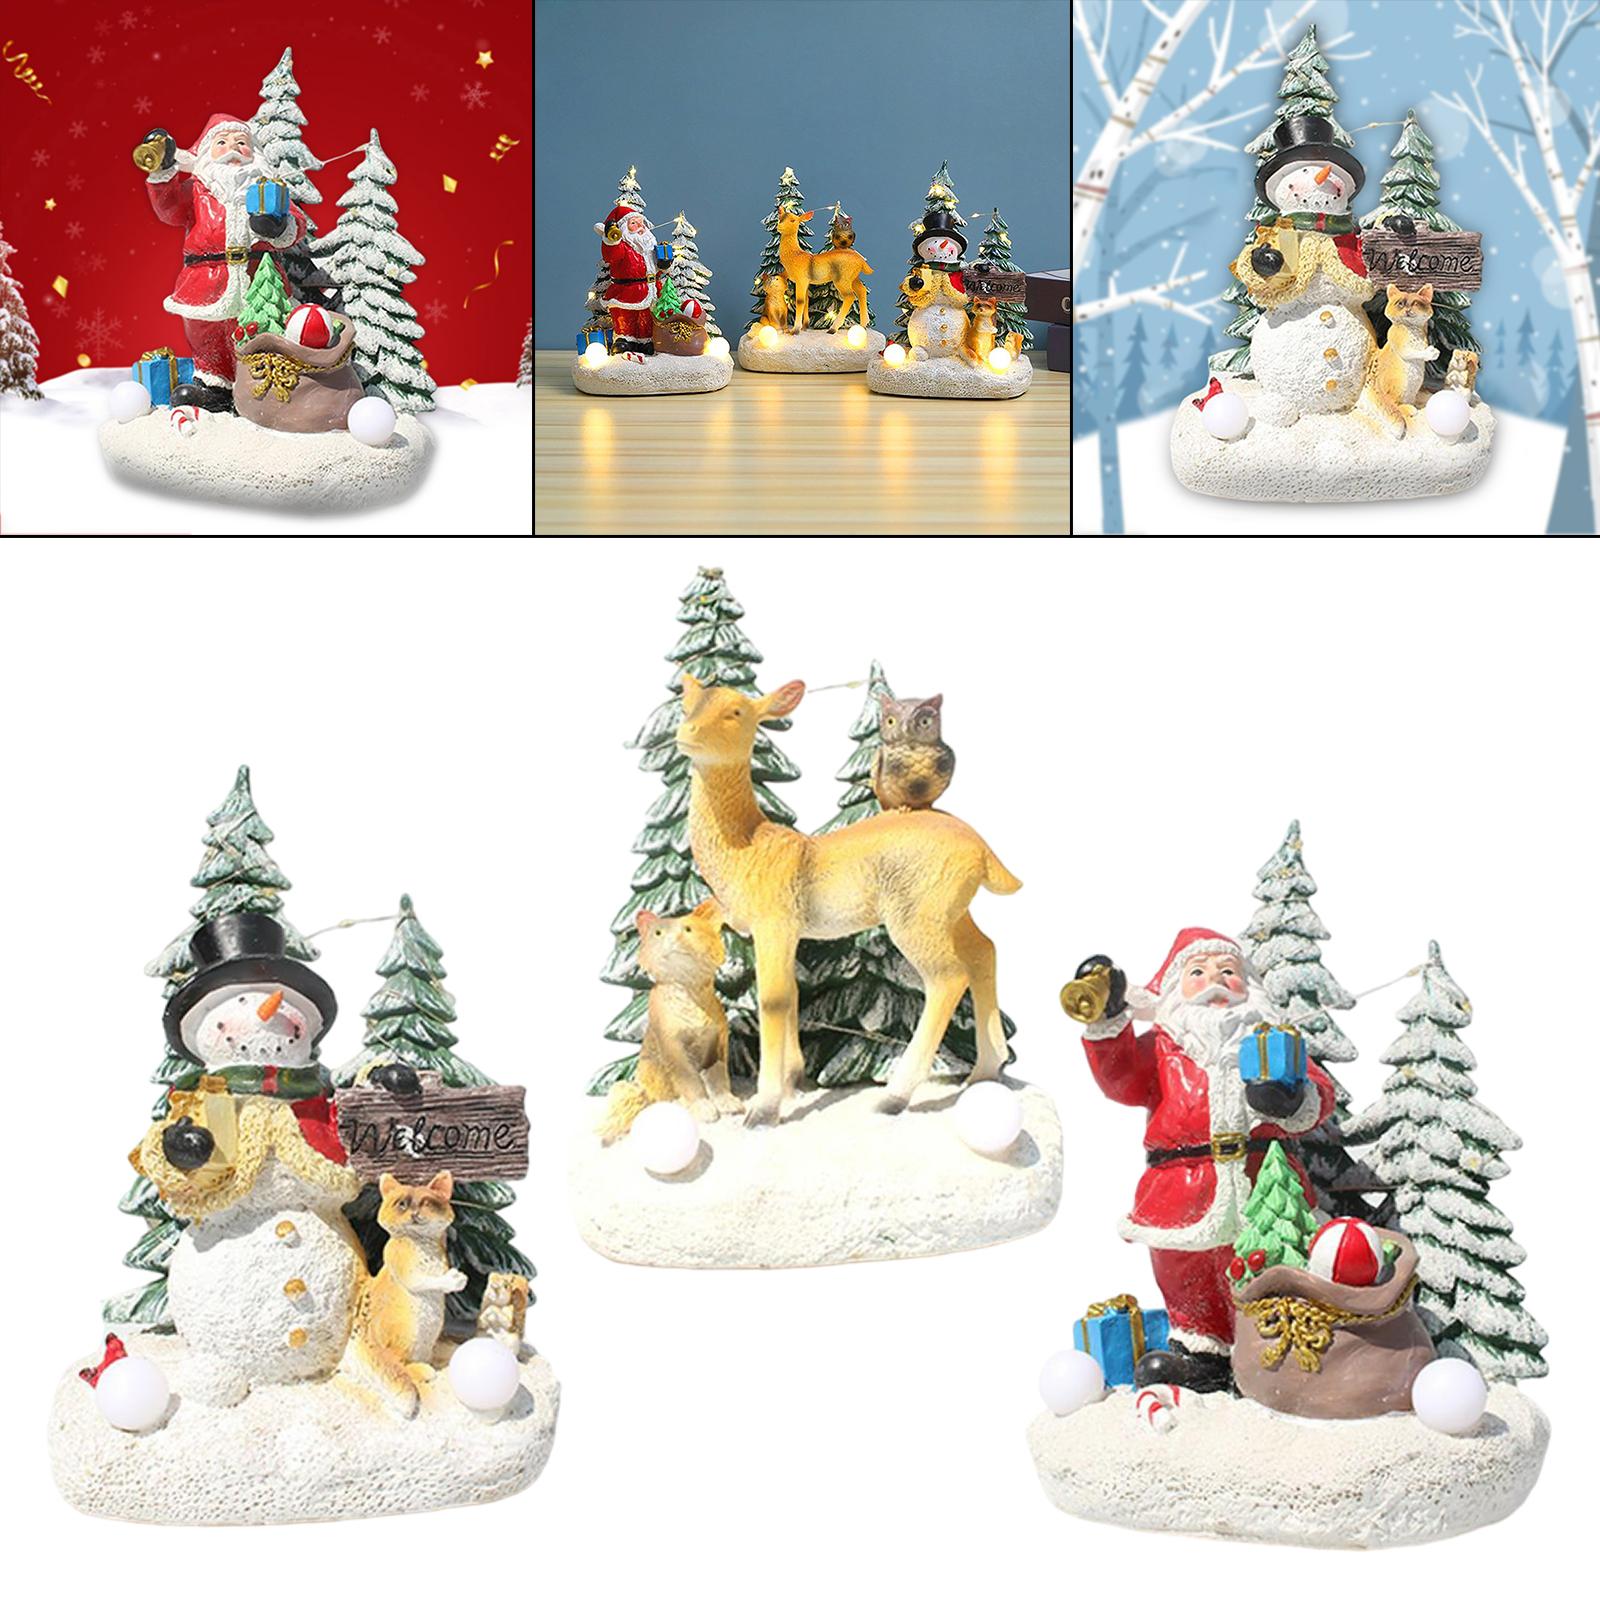 Lighted Christmas Miniature Figurines Toys DIY Accessories Doll House Decor Santa Claus